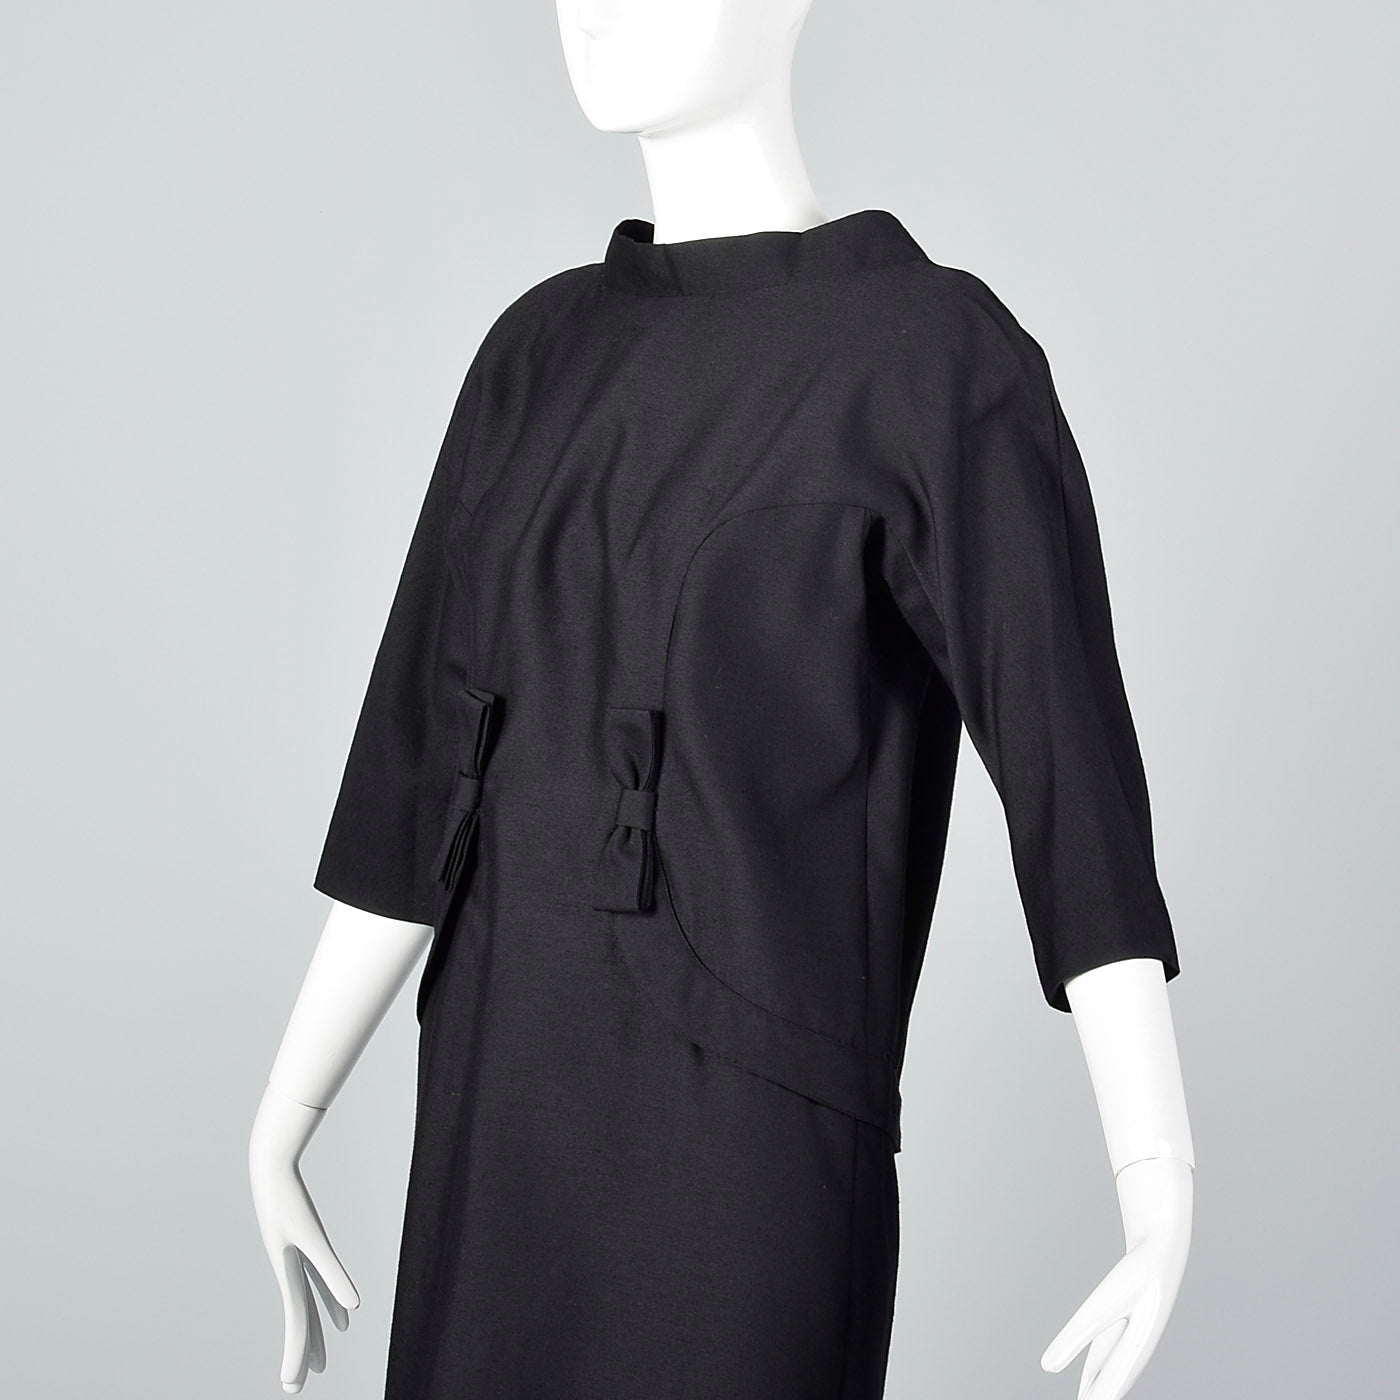 1950s Suzy Perette Avant Garde Black Wool Sack Dress